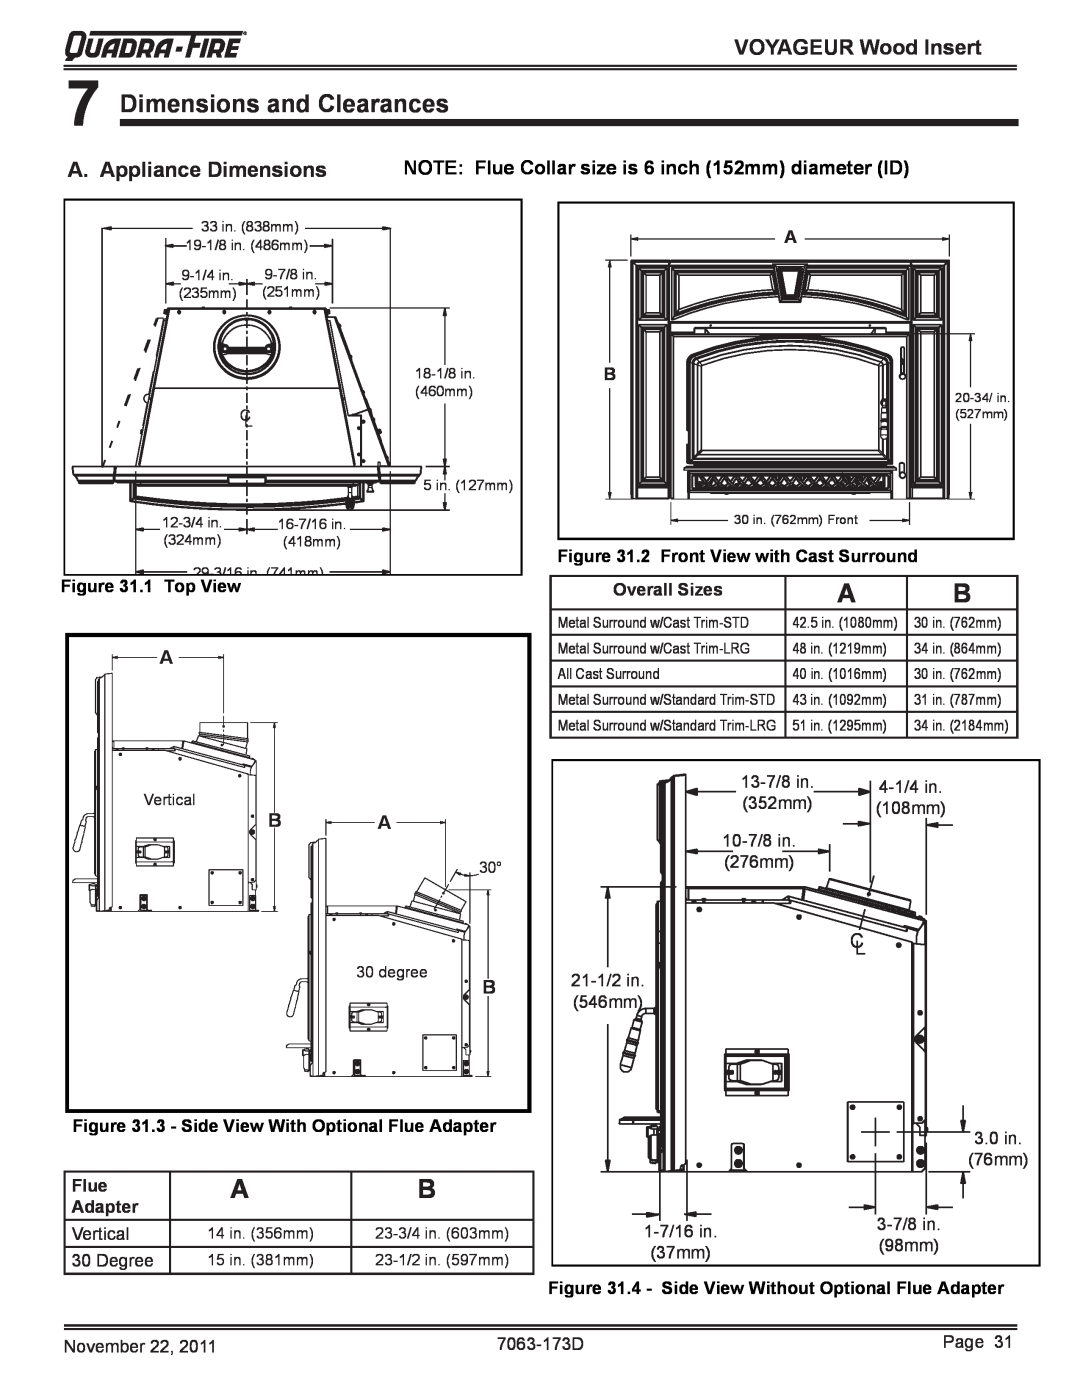 Quadra-Fire VOYAGEUR-MBK 7Dimensions and Clearances, A. Appliance Dimensions, VOYAGEUR Wood Insert, 1 Top View, Flue 